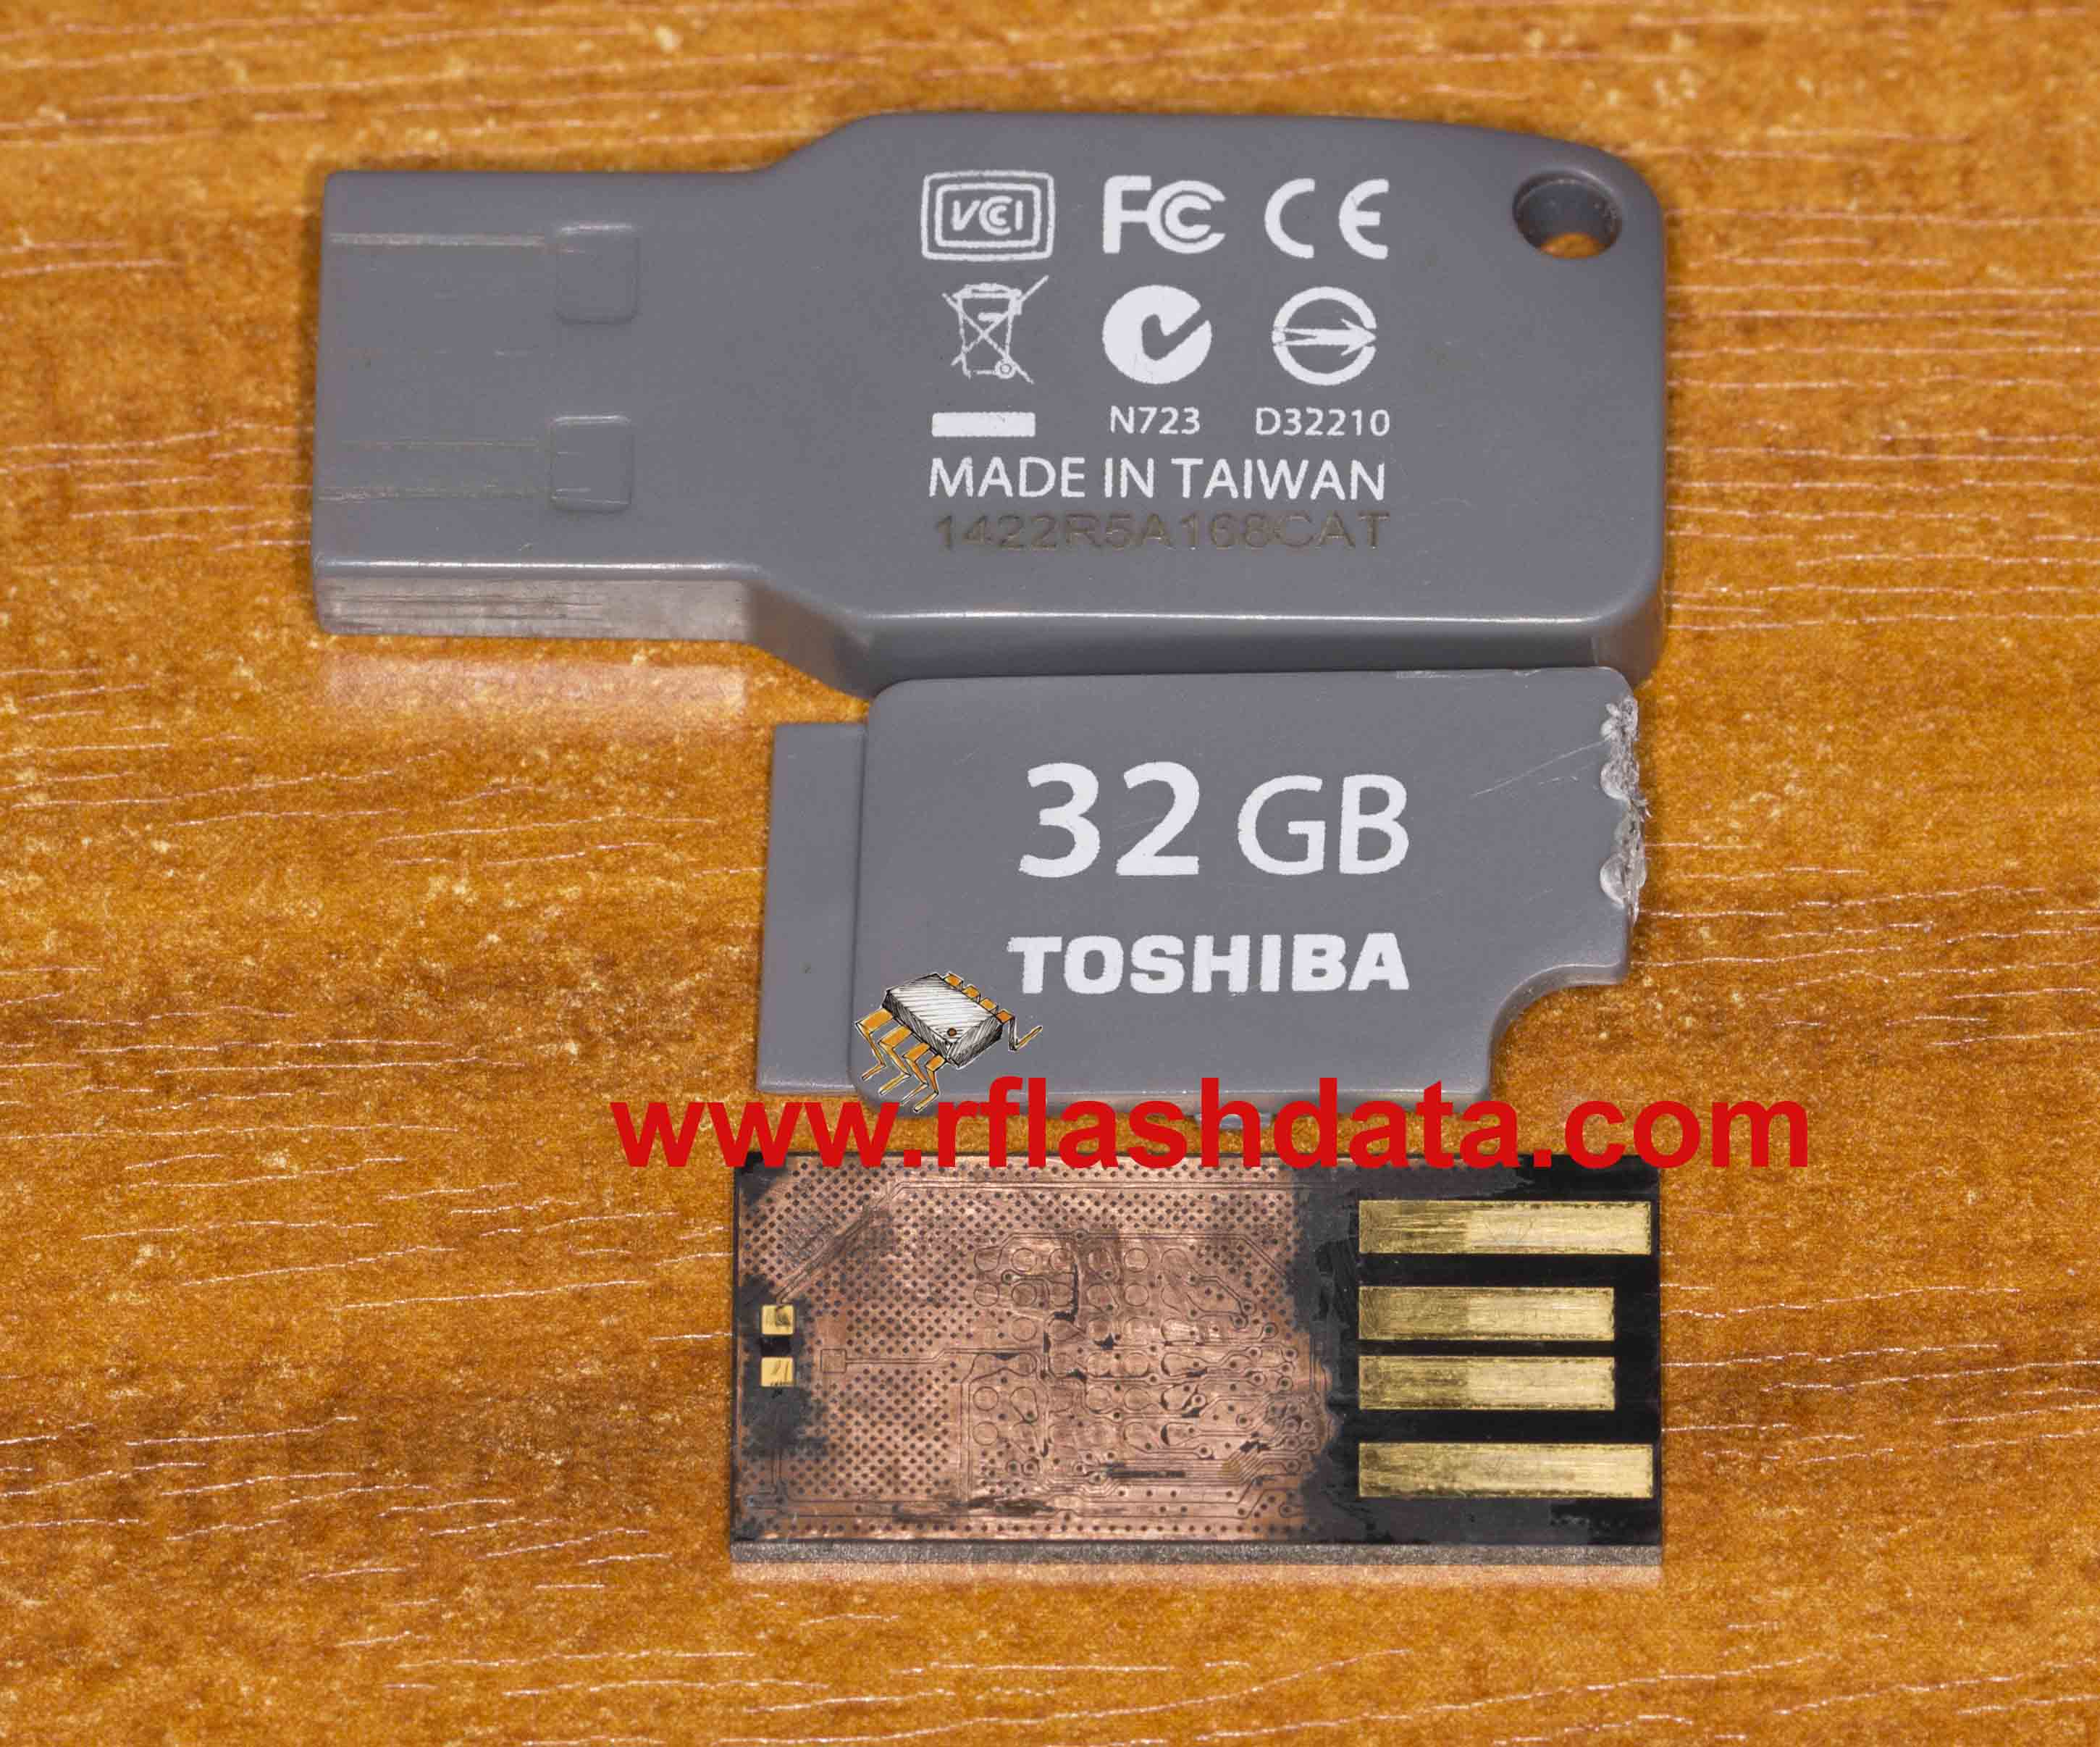 Toshiba USB flash drive